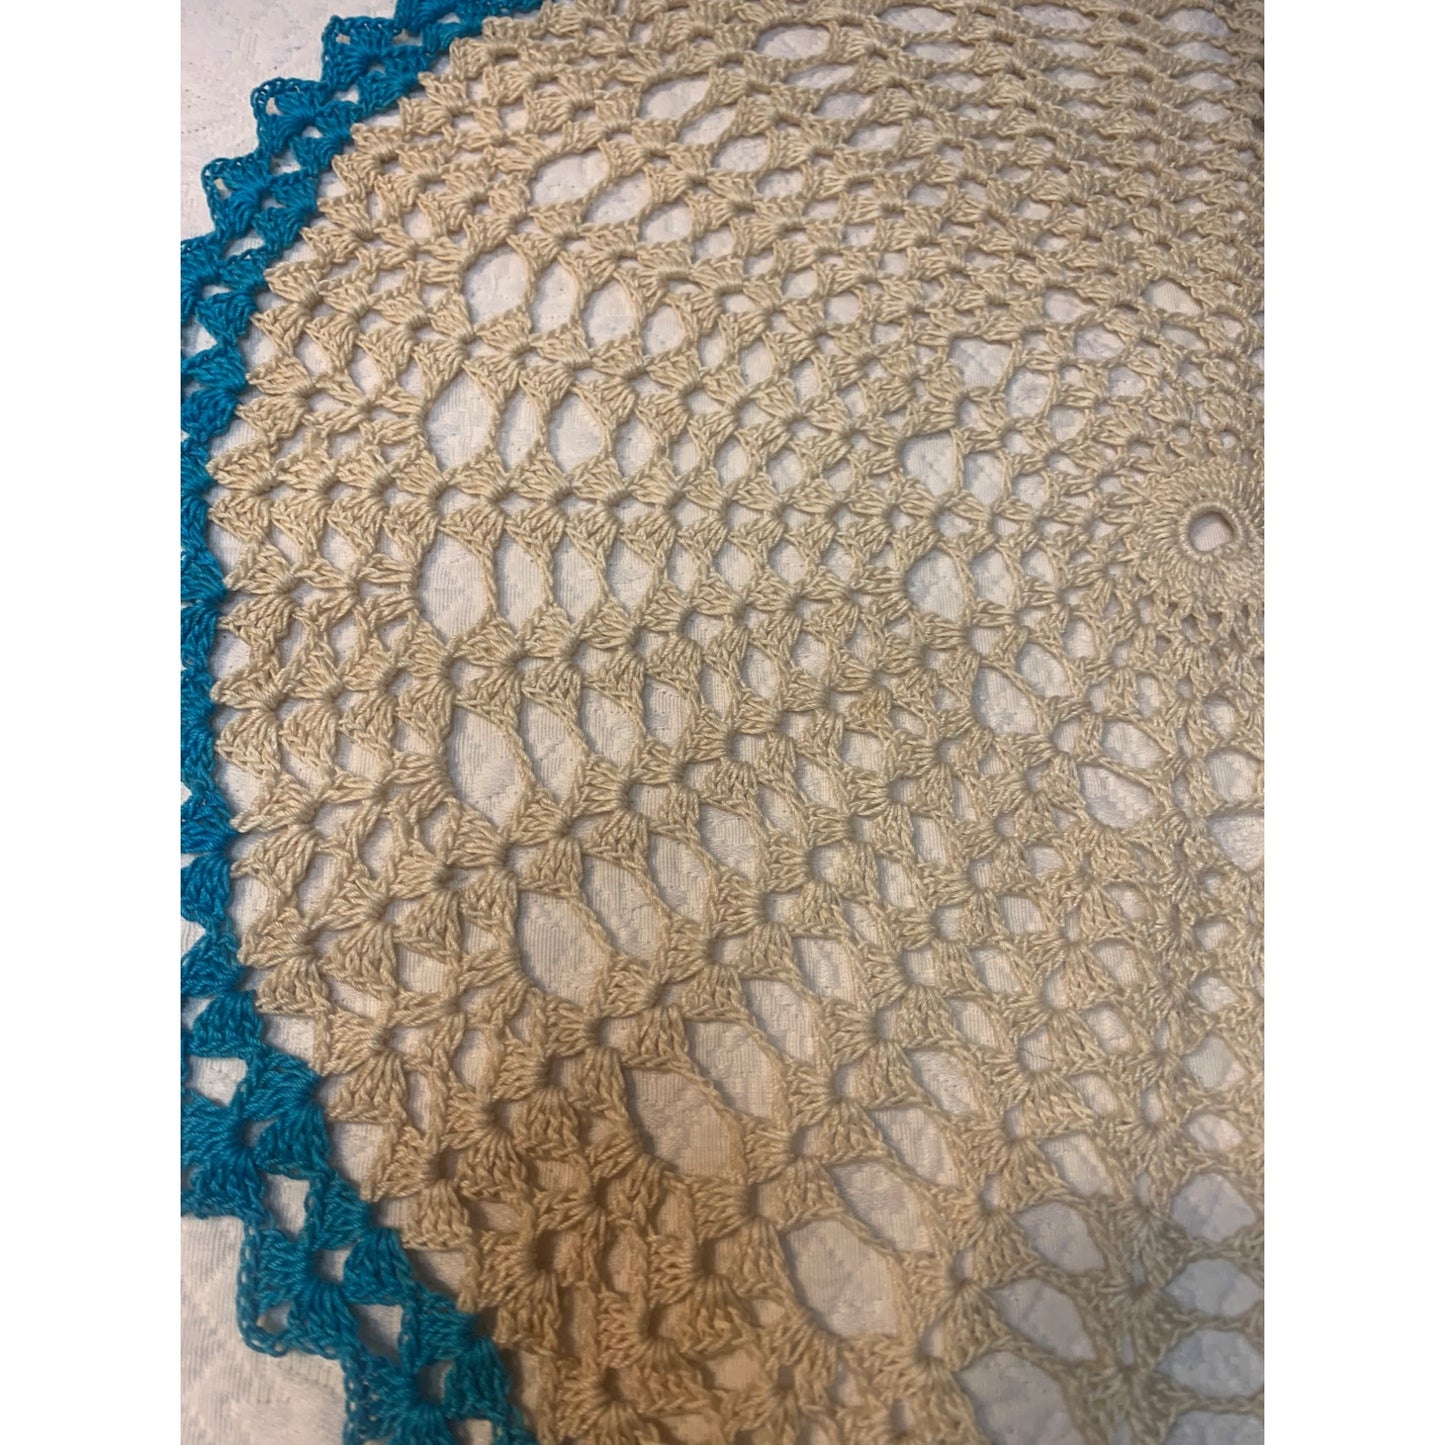 Vintage hand crocheted doily with aqua edge